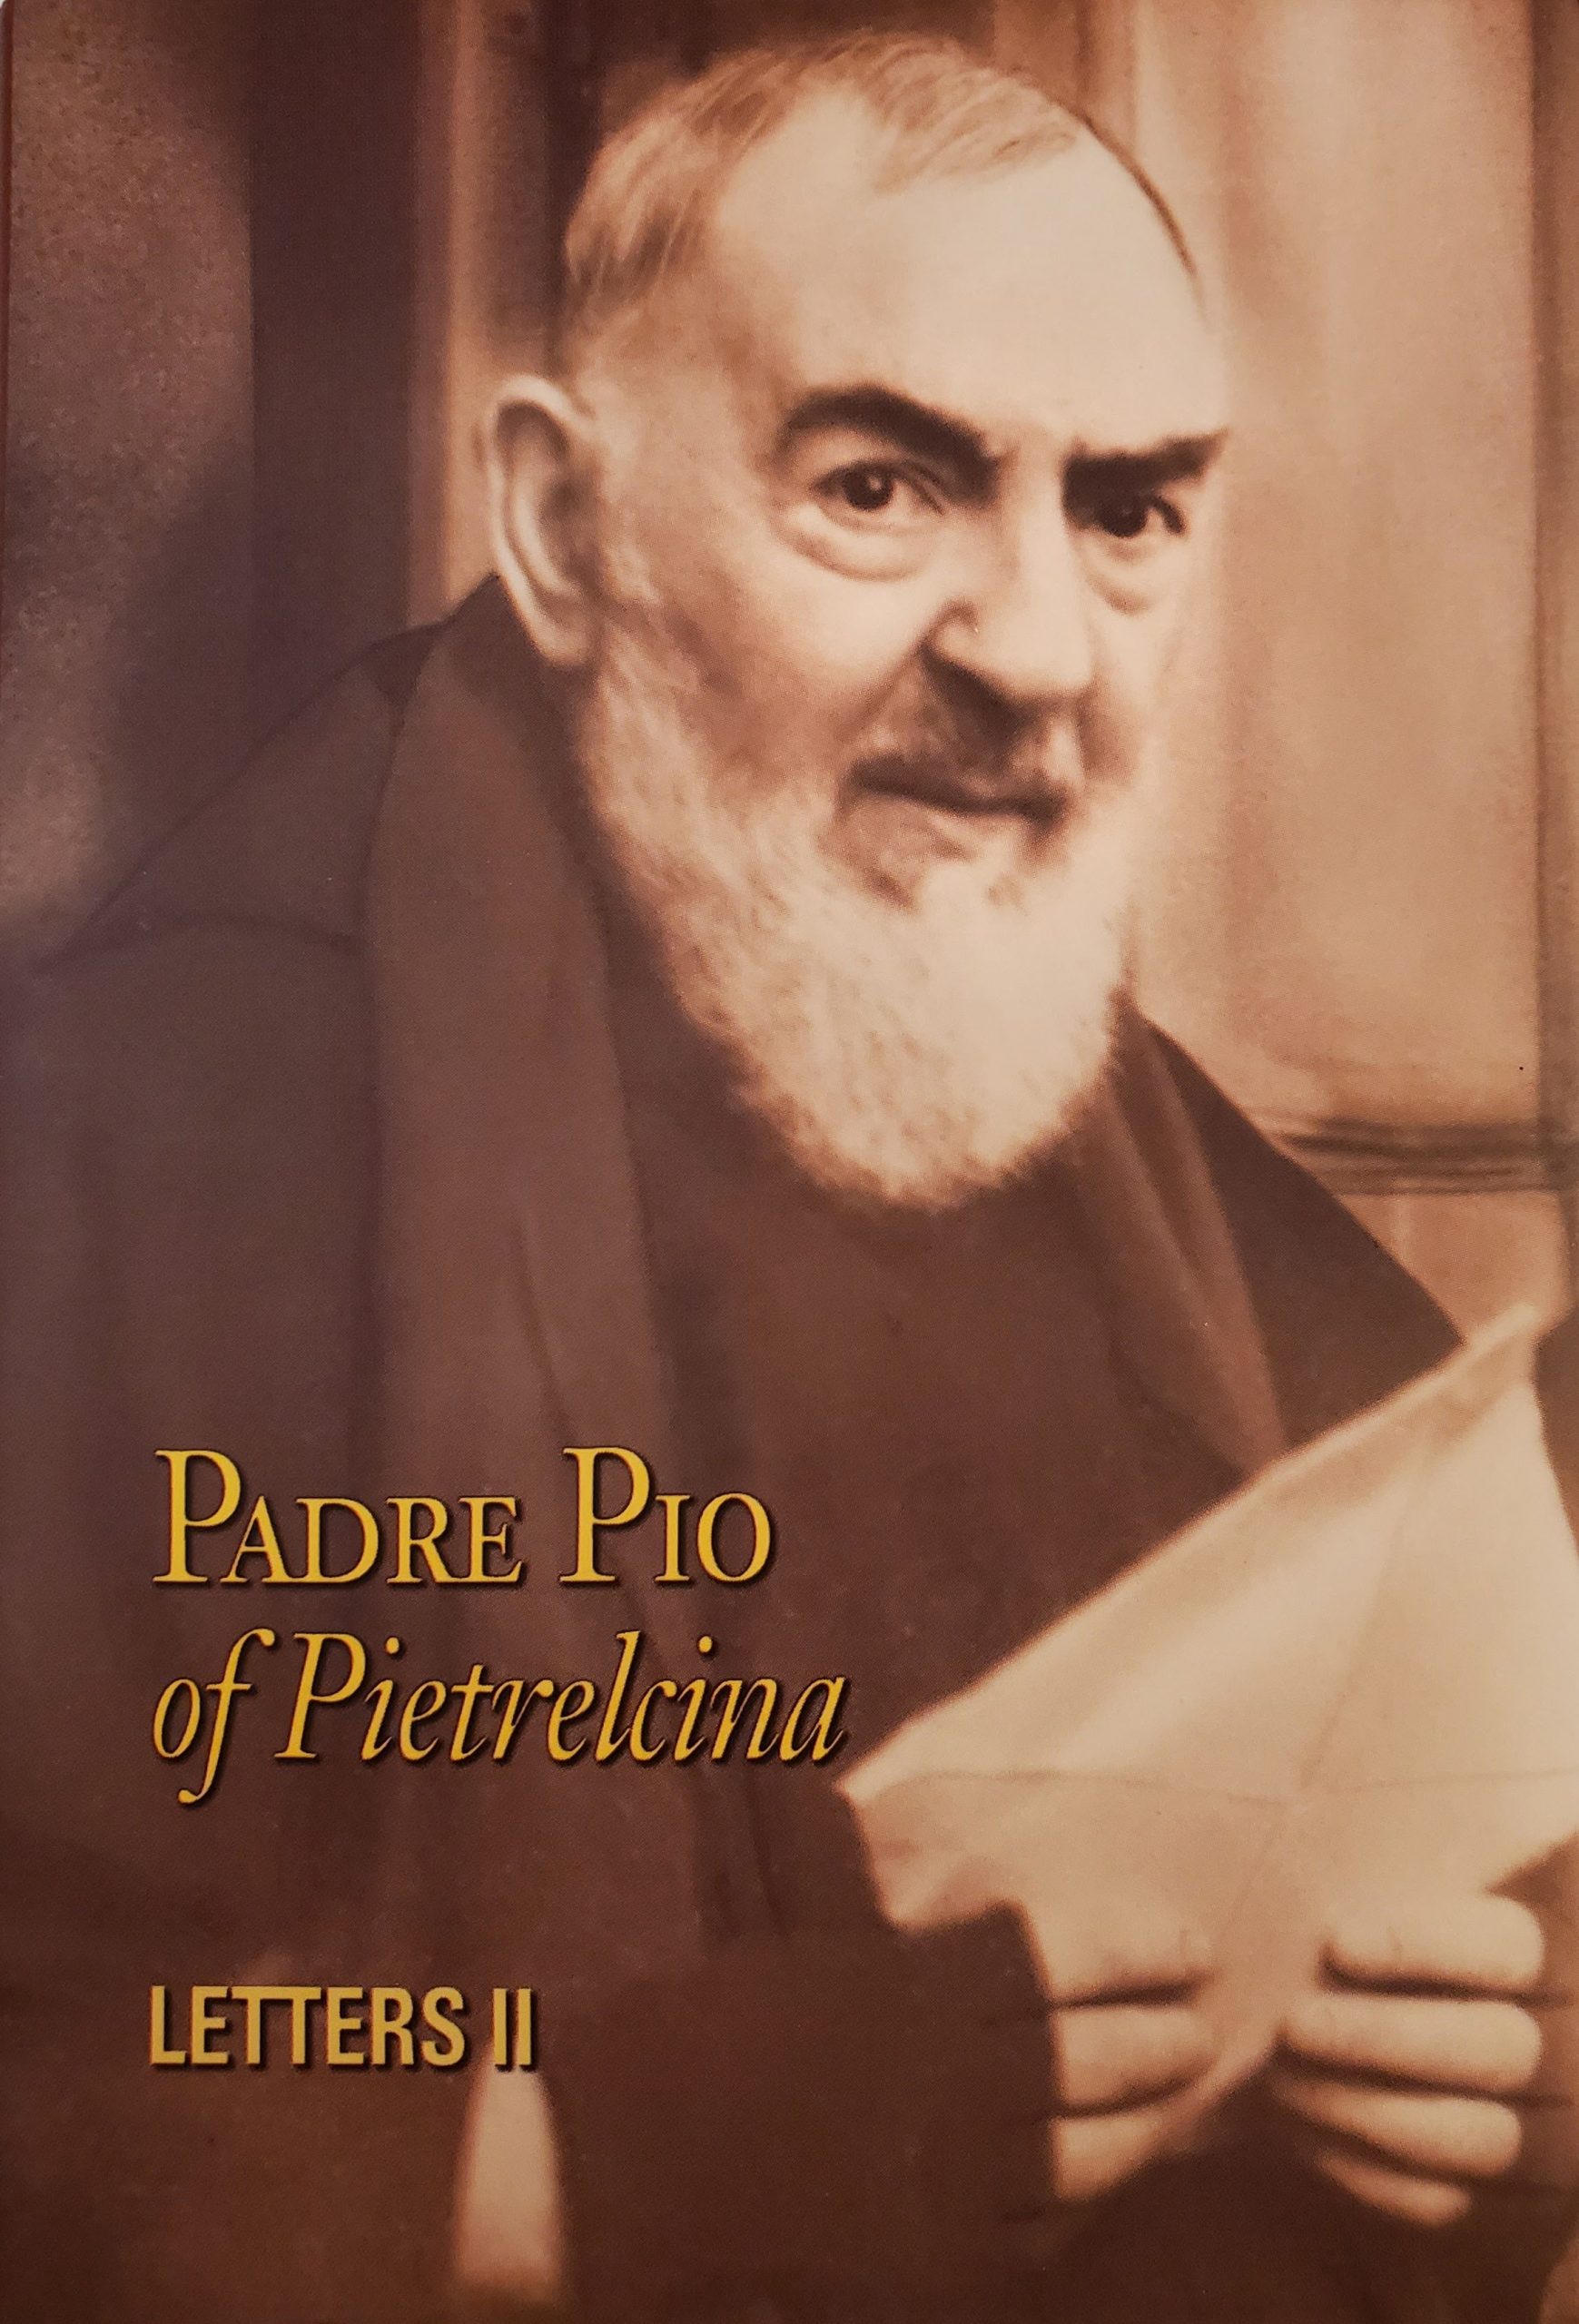 Letters II - Padre Pio of Pietrelcina - Padre Pio Foundation of America